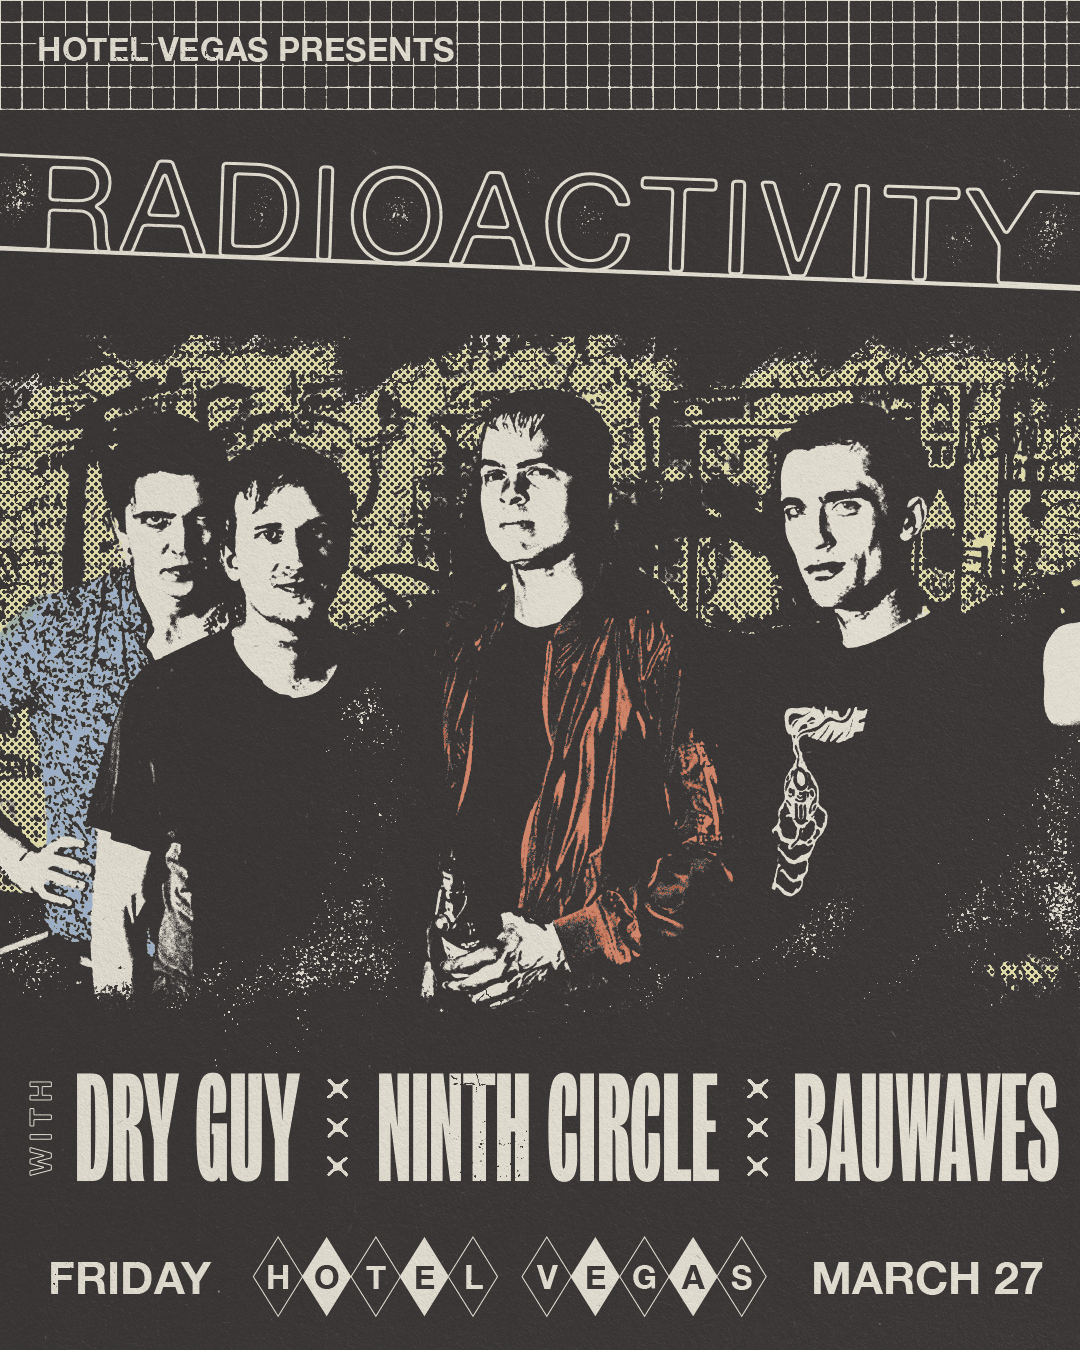 CANCELLED: Radioactivity with Dry Guy, Ninth Circle, Bauwaves